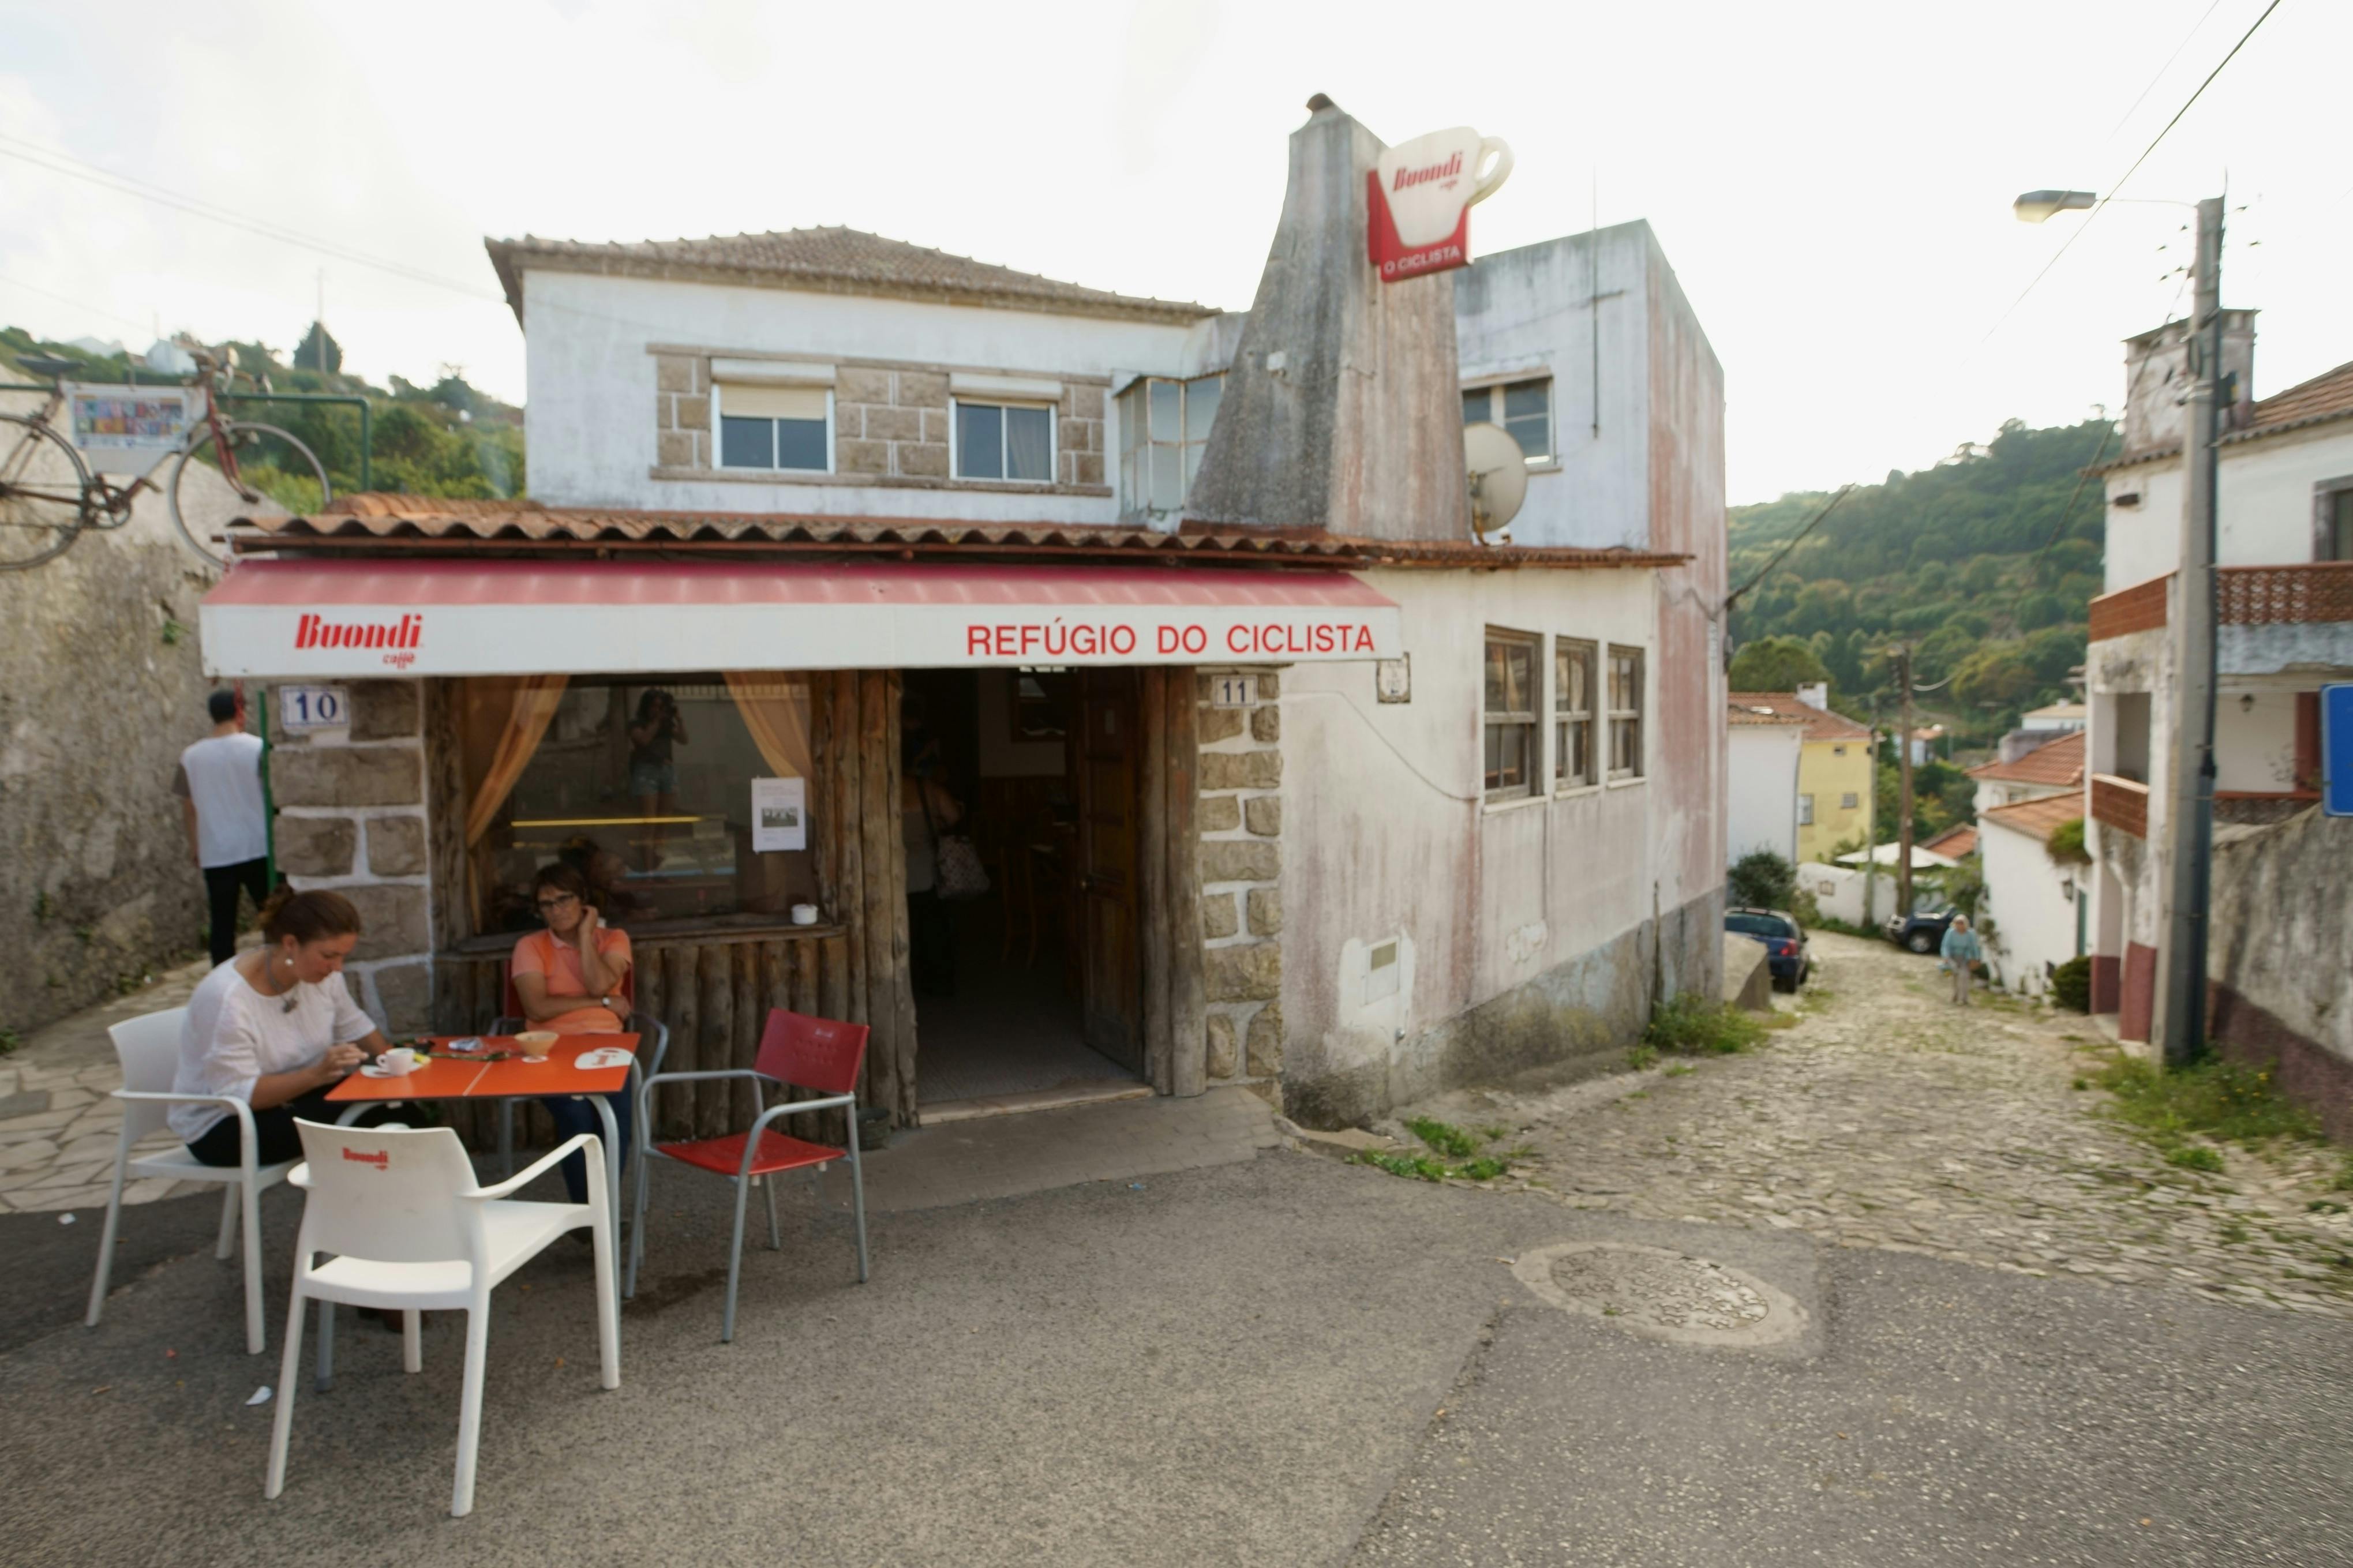 Small restaurant in a quaint village | Source: Pexels